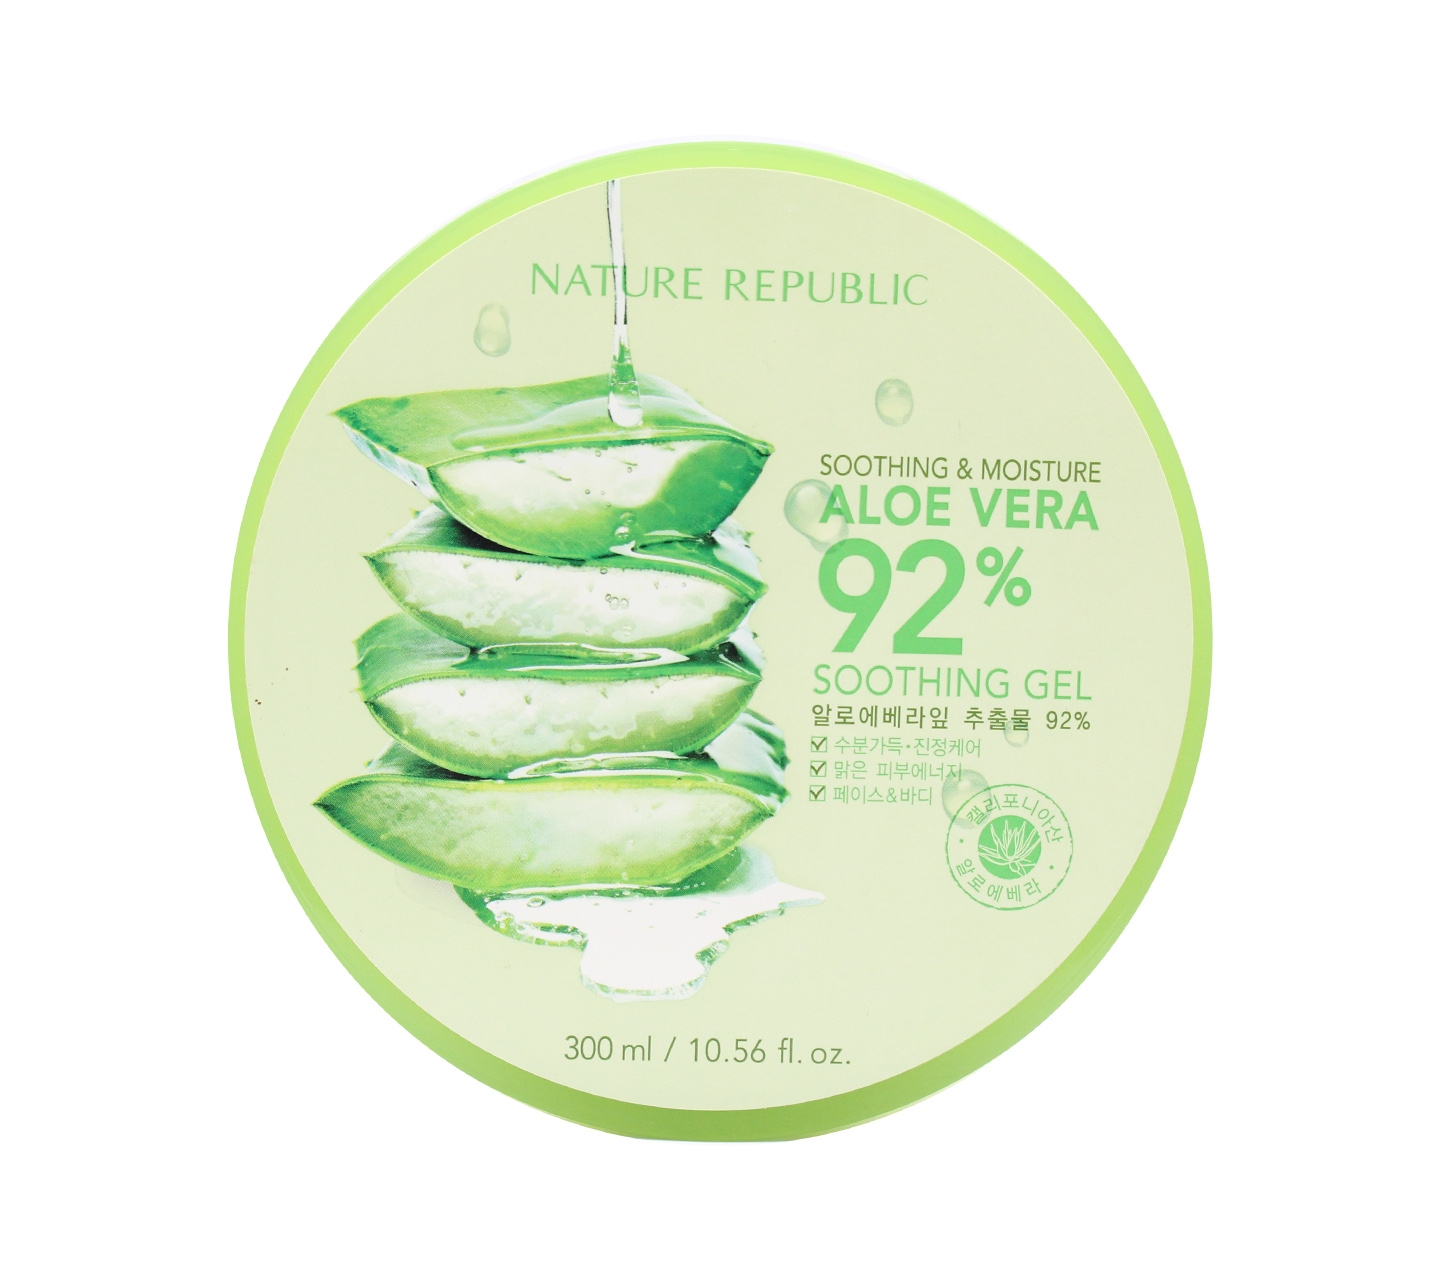 Nature Republic Shoothing & Moisture Aloe Vera 92% Soothing Gel Skin Care